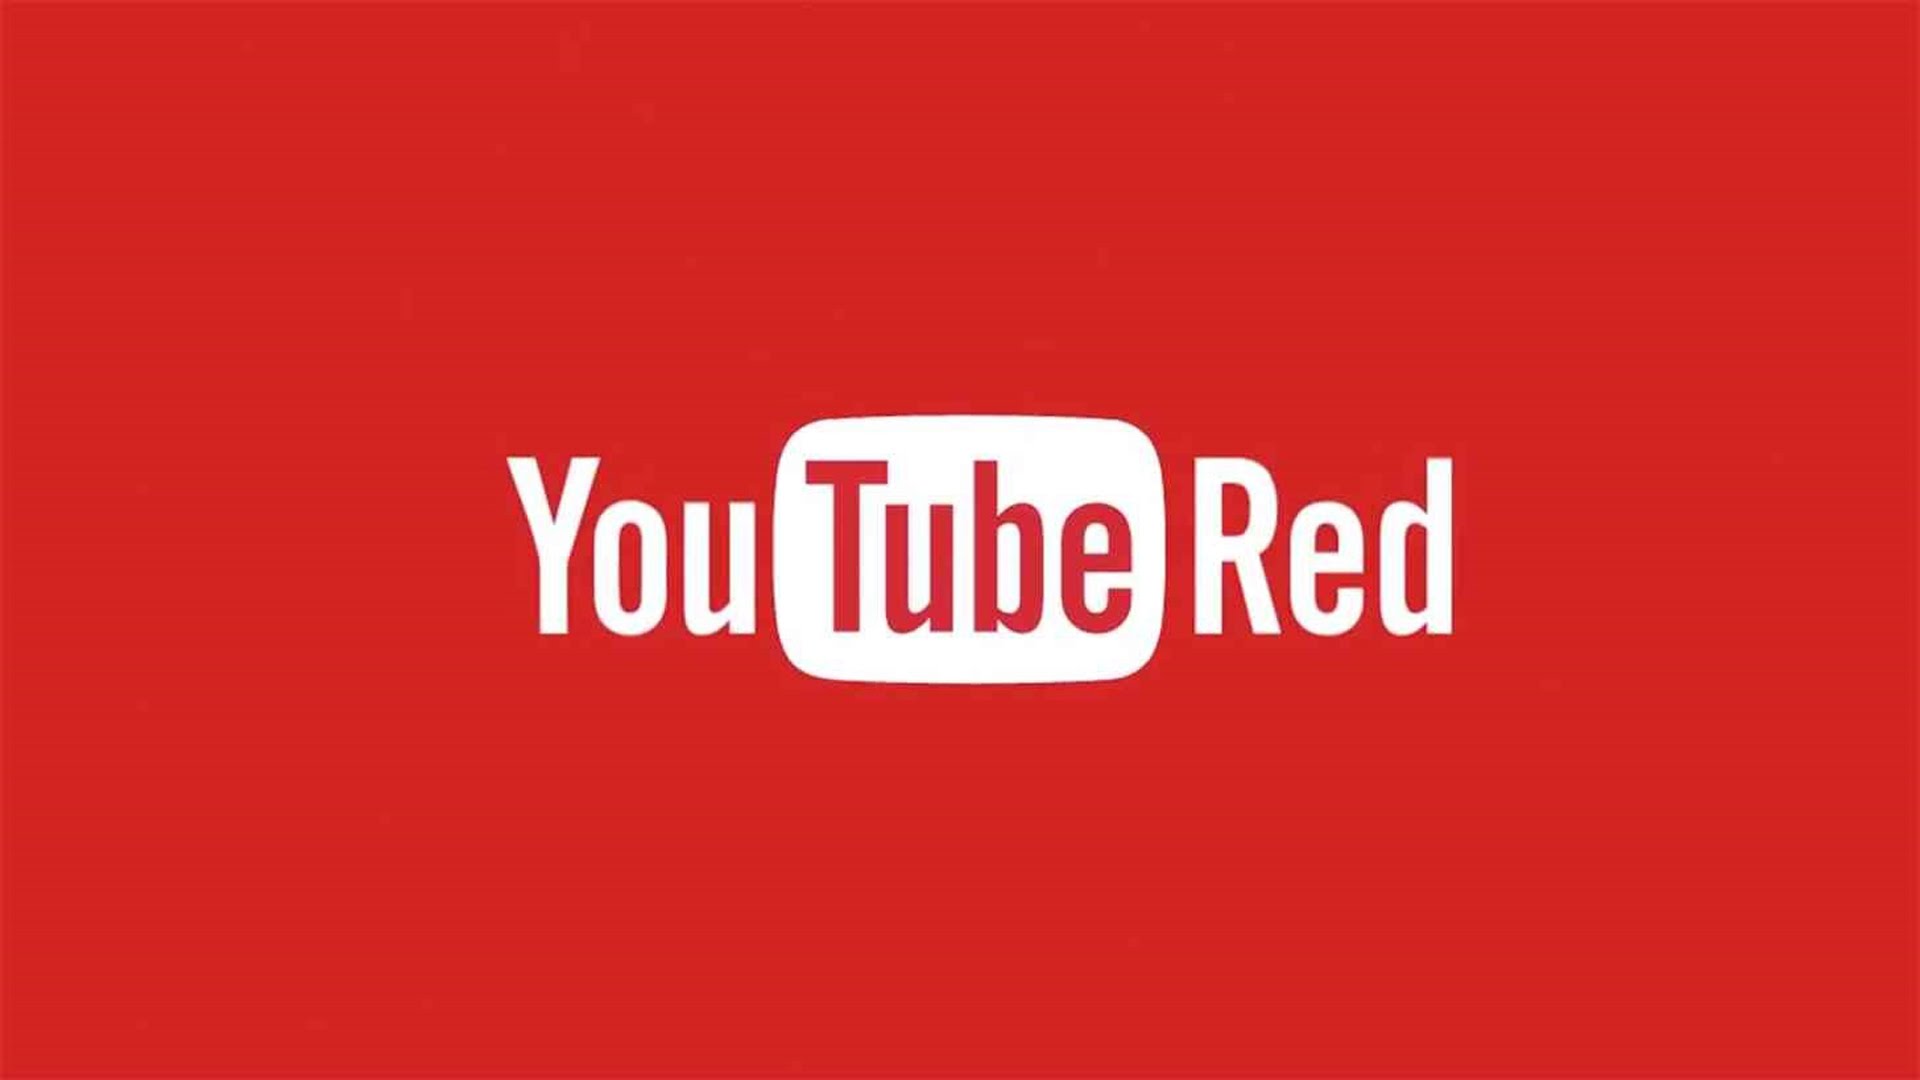 Введи youtube. Фото для ютуба. Youtube Red. Логотип ютуб. Ютуб красный.